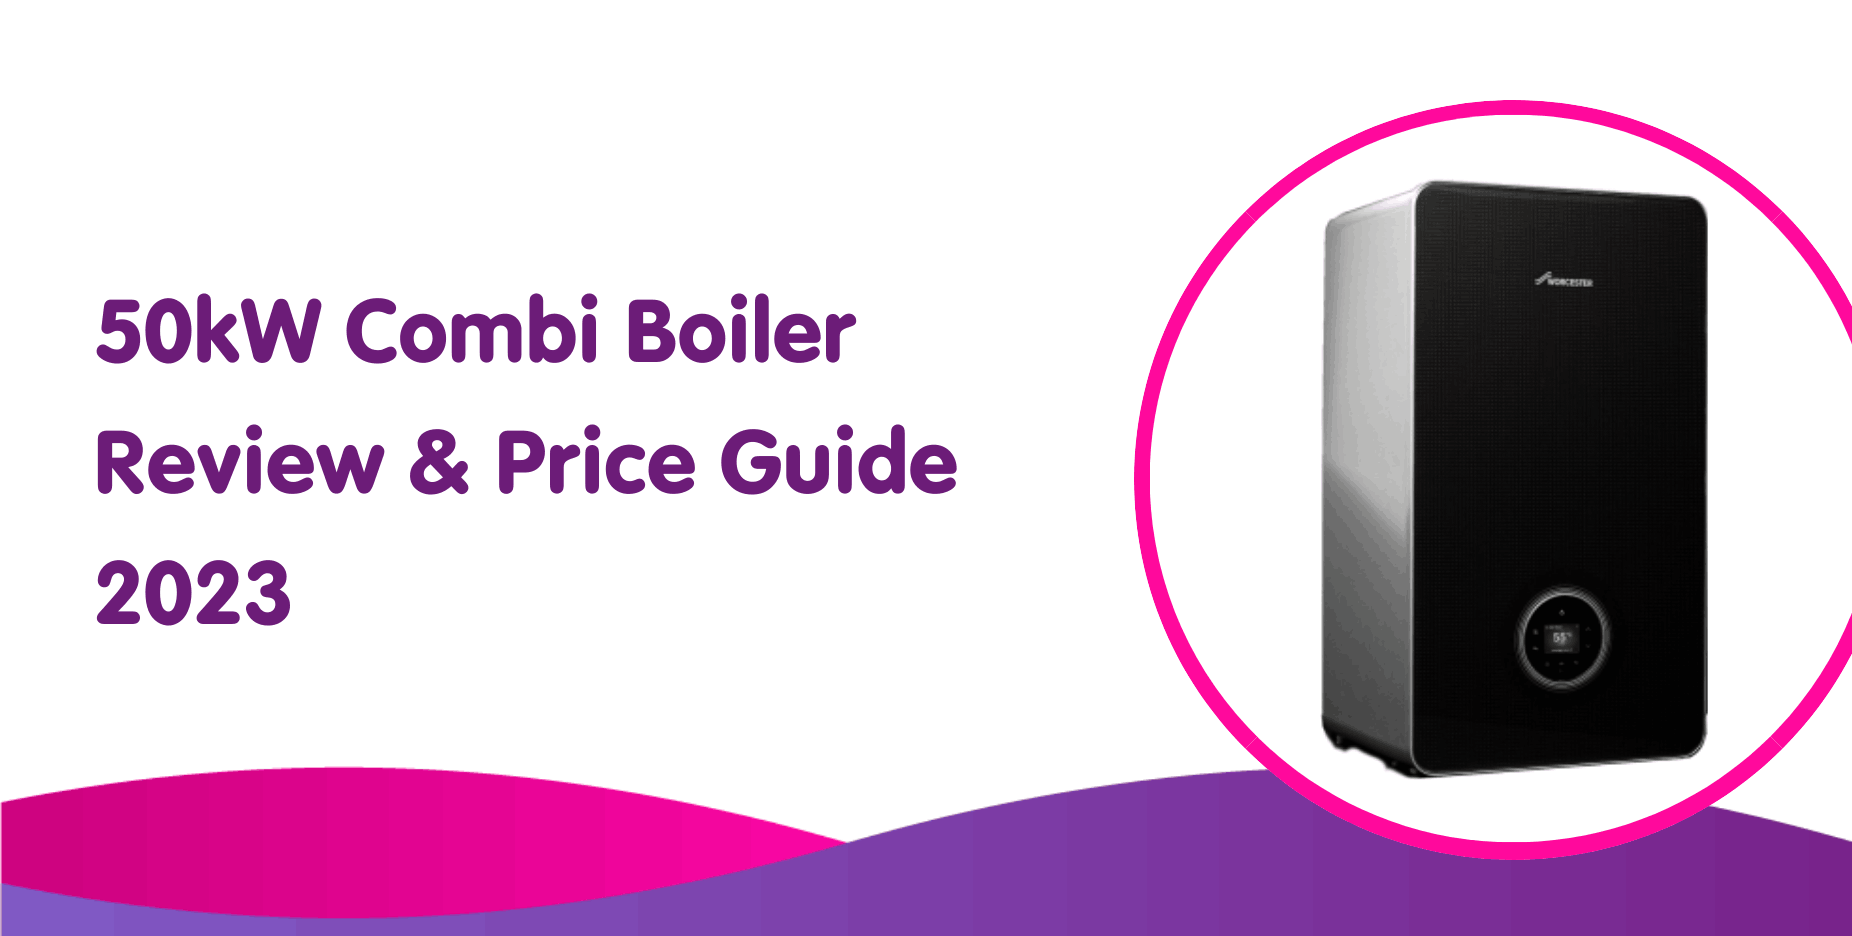 50kW Combi Boiler Review & Price Guide 2023